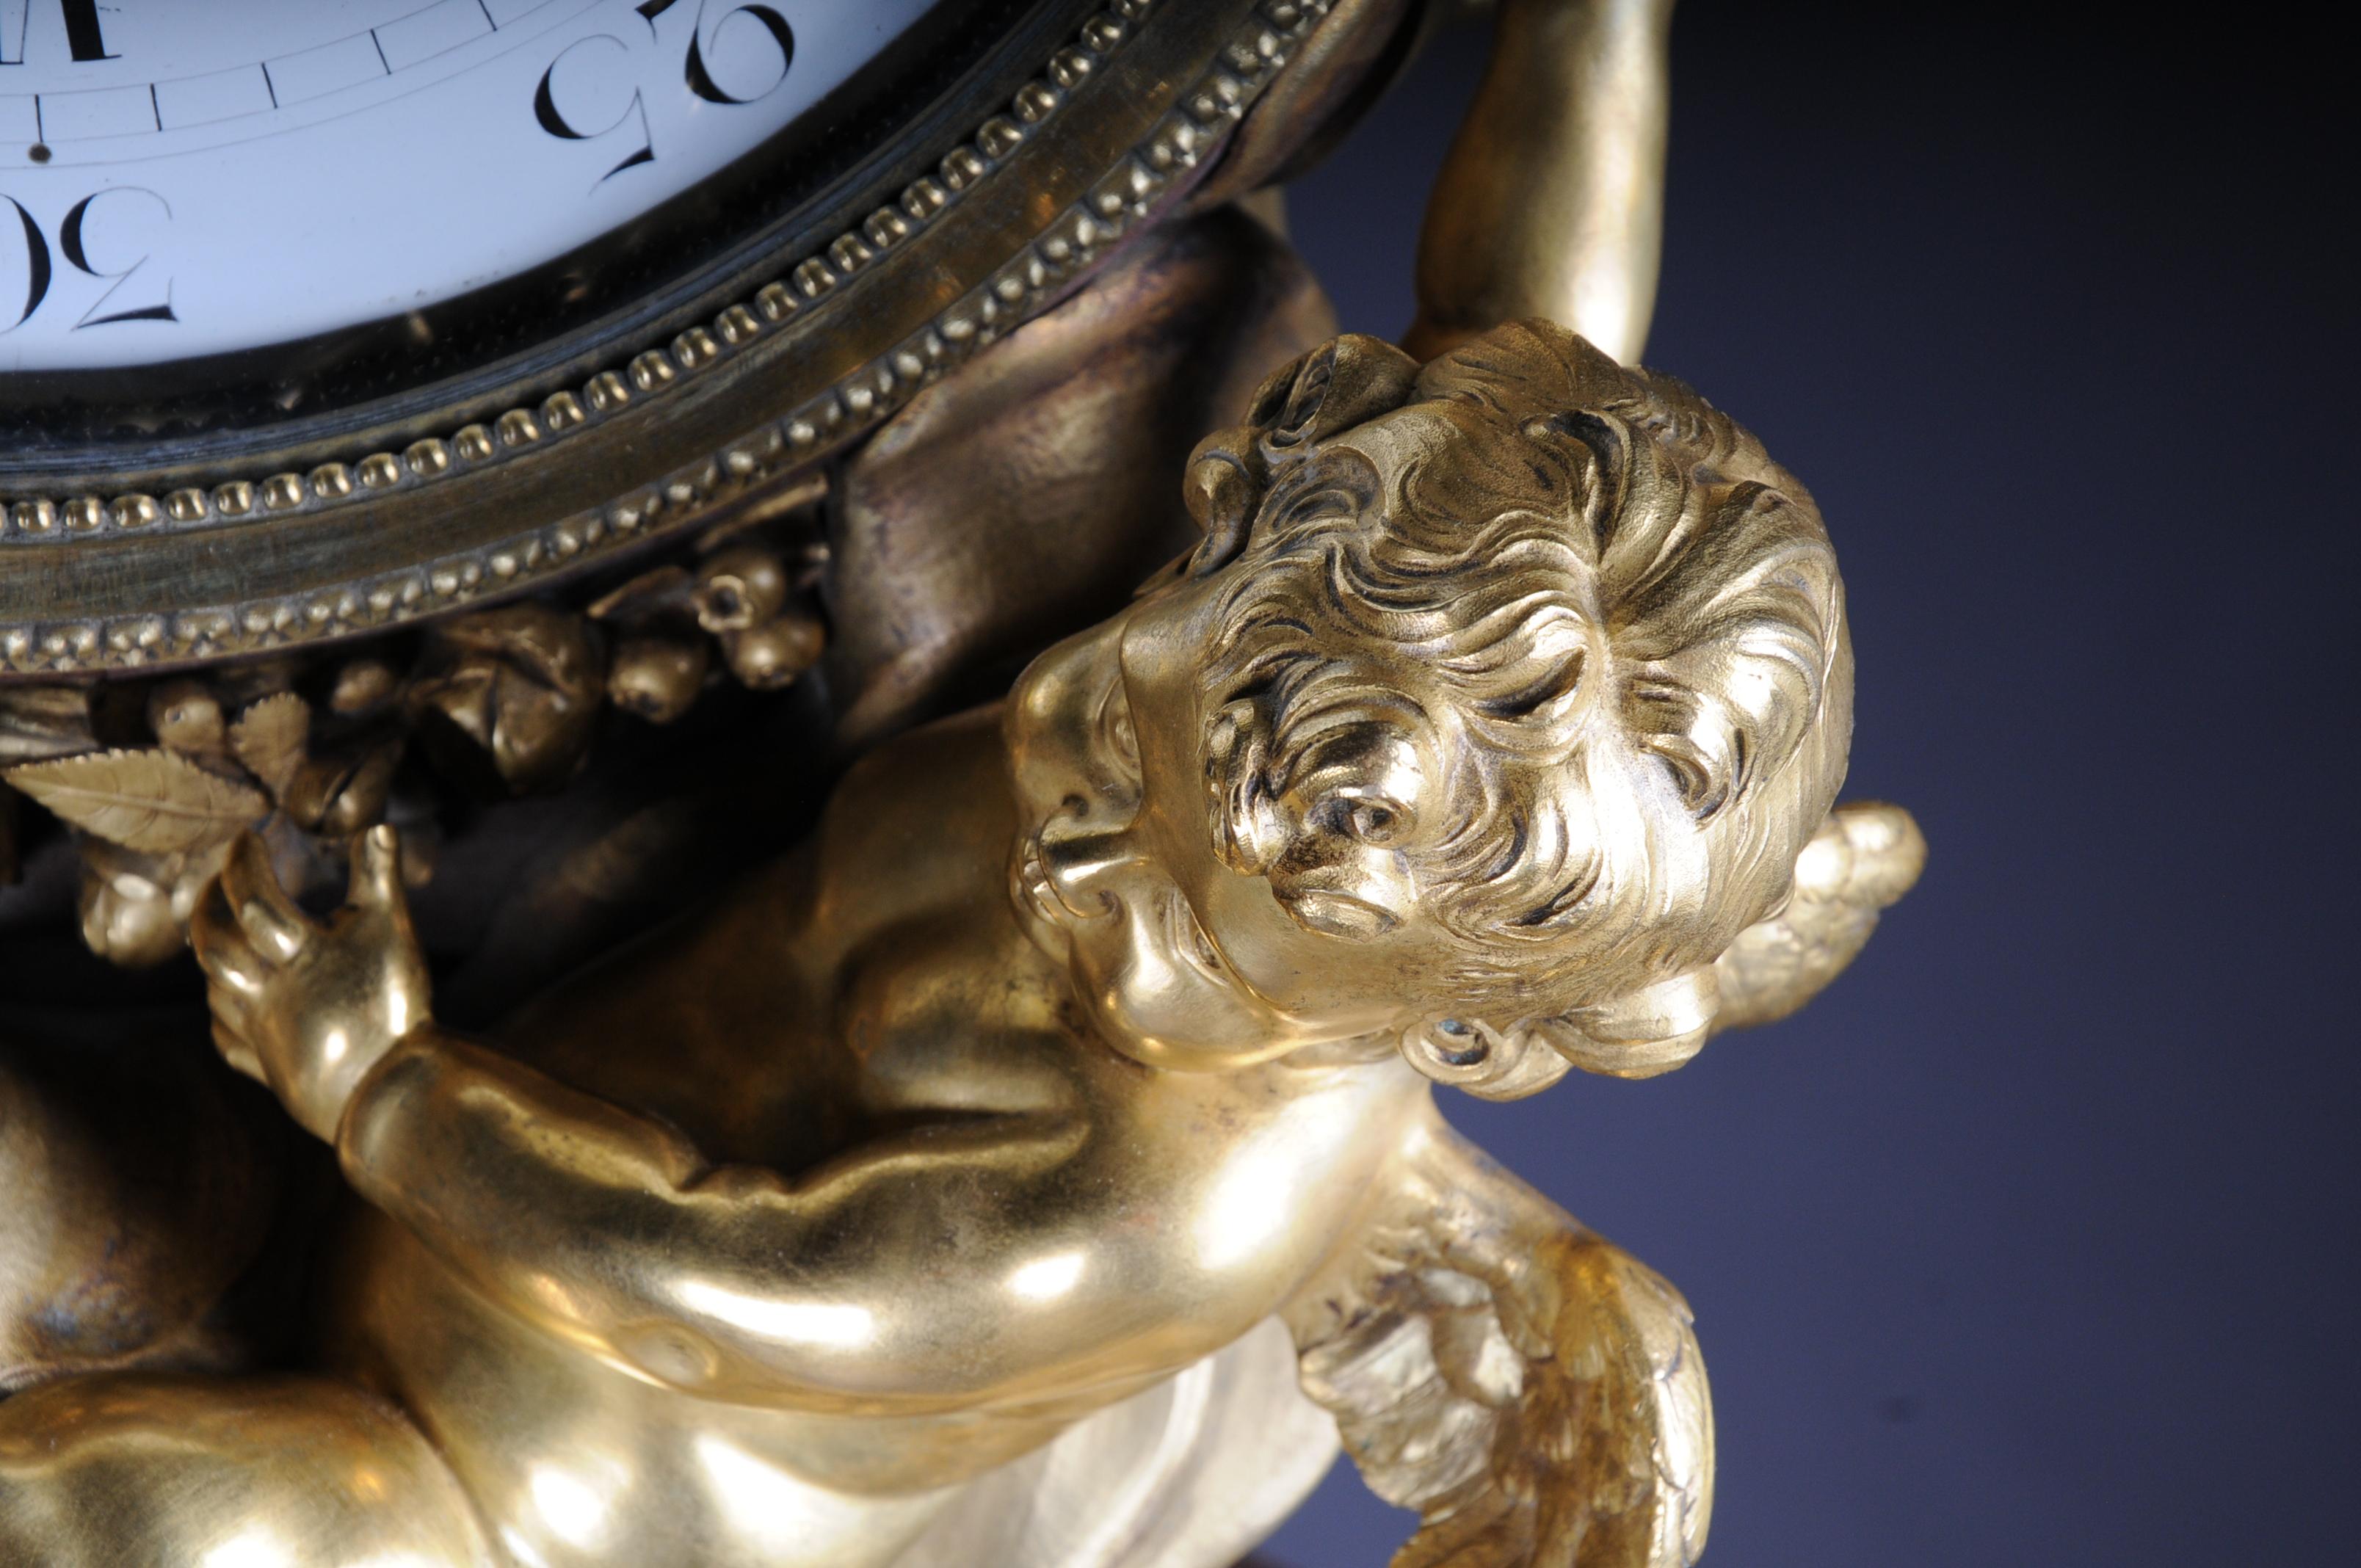 Napoleon III Pedestal Clock “Parquet Regulator” after Jean-Henri Riesener, 1734 For Sale 7